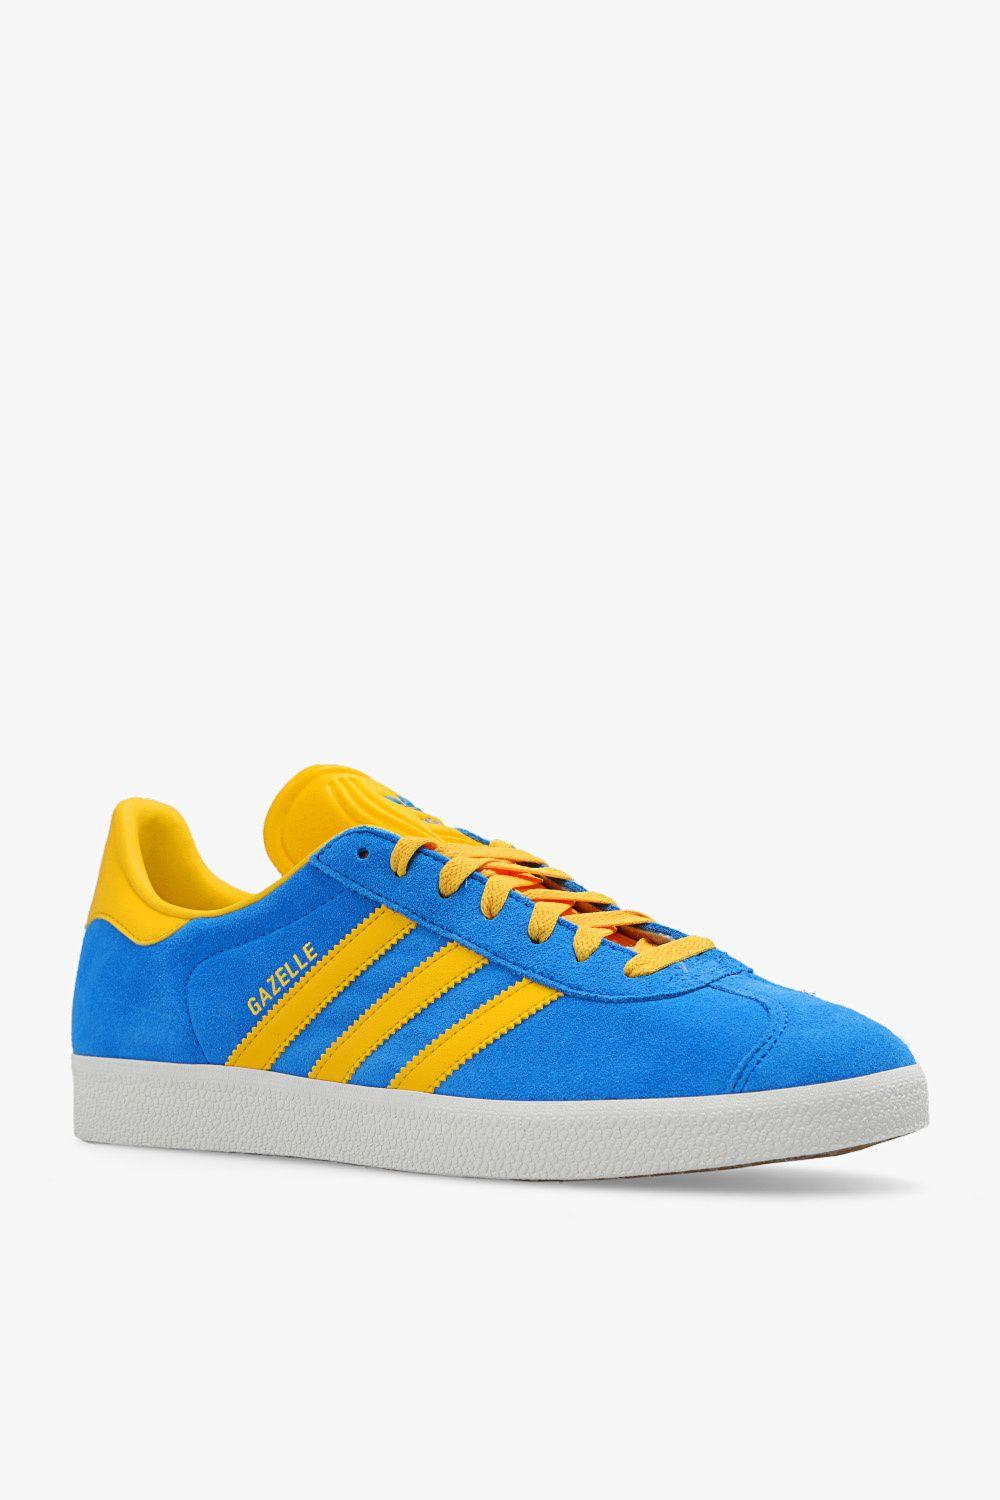 adidas Originals 'gazelle' Sneakers in Blue | Lyst